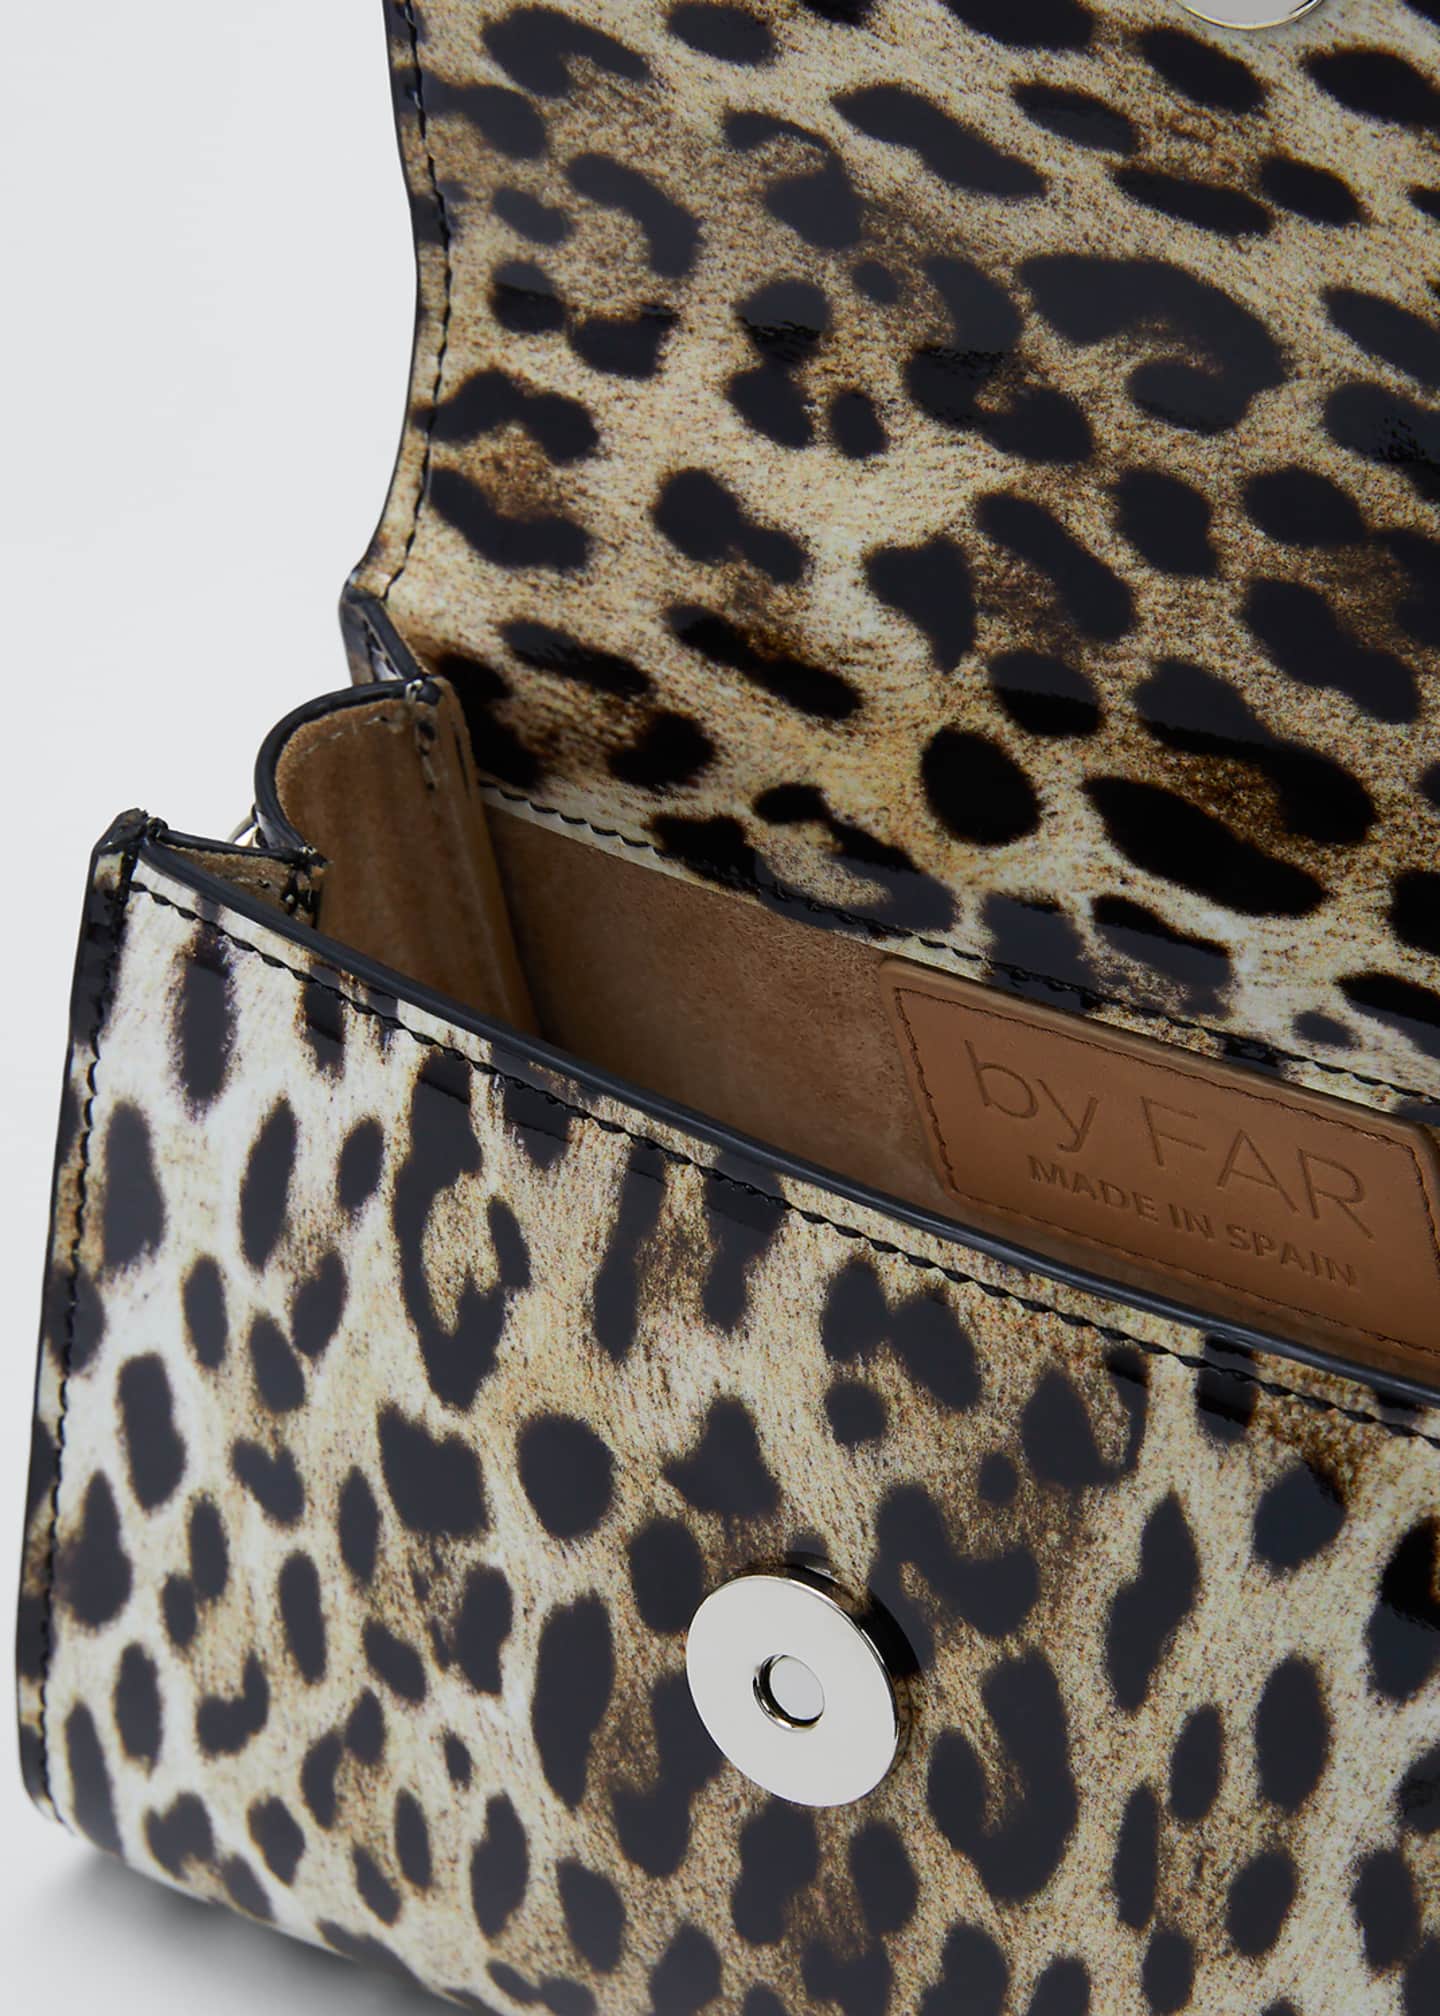 BY FAR Mini Leopard-Print Leather Top-Handle Bag - Bergdorf Goodman